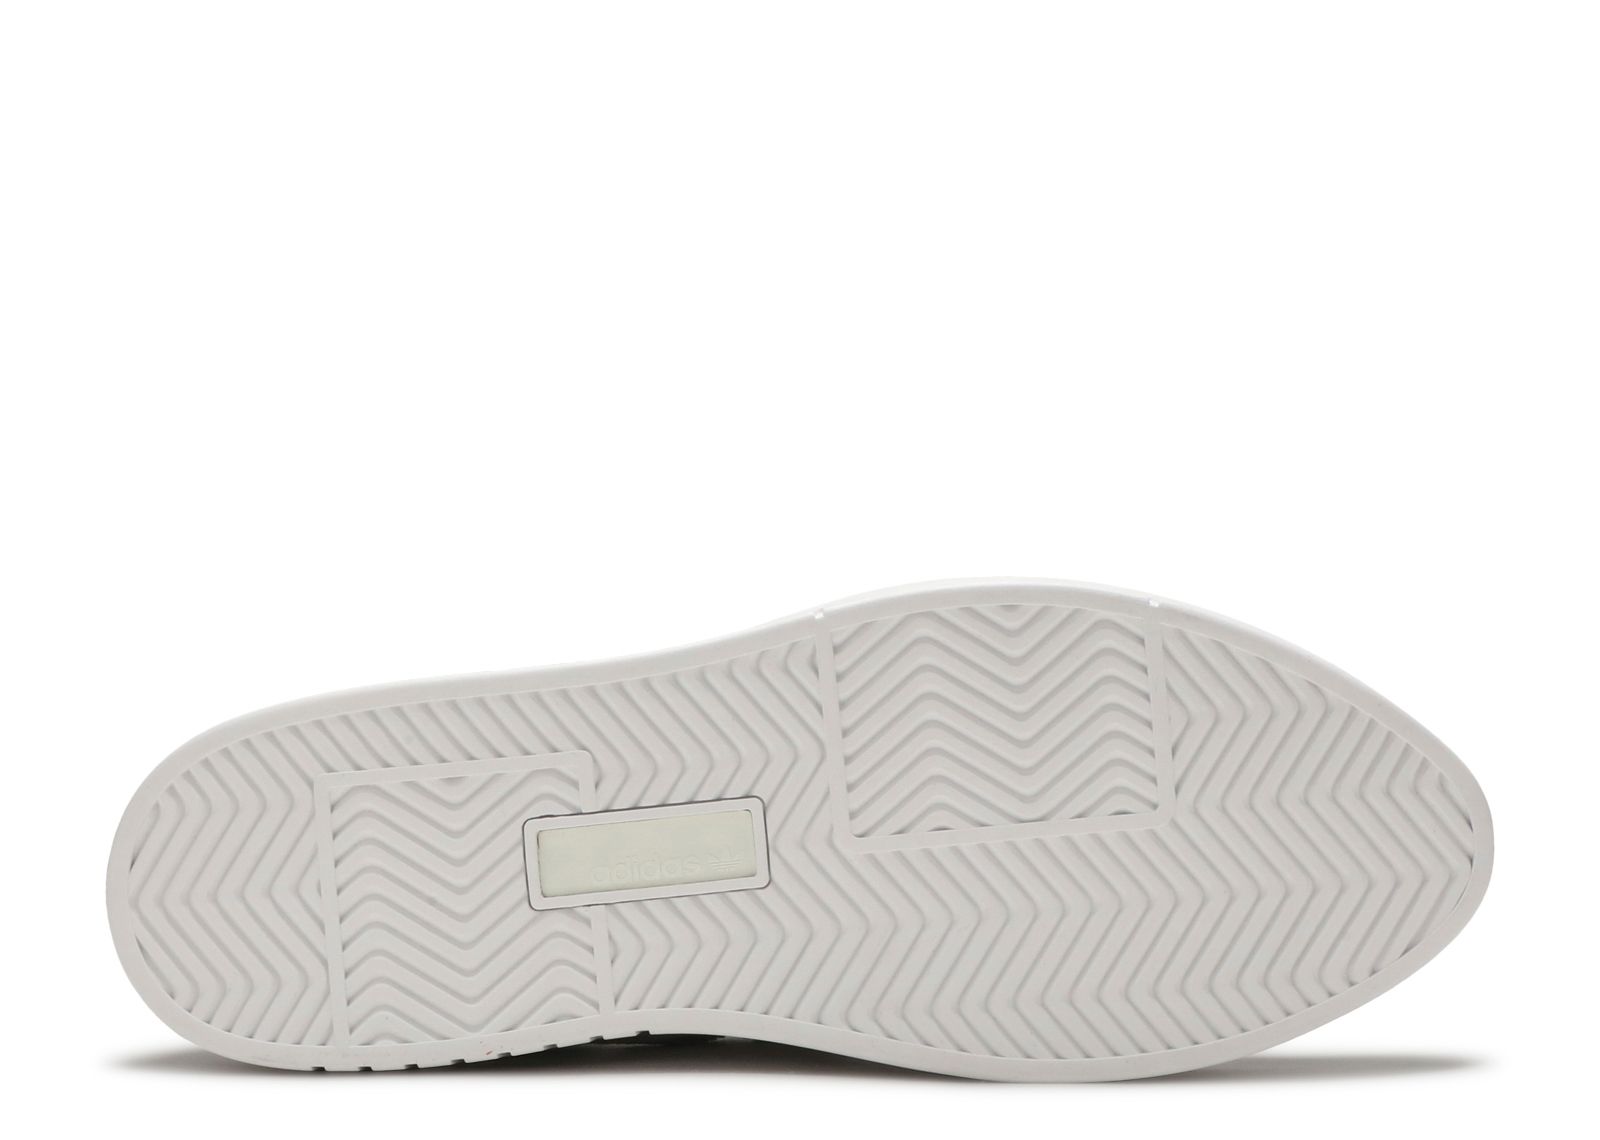 adidas womens Sleek Super 72 Platform Sneakers, White, 9 